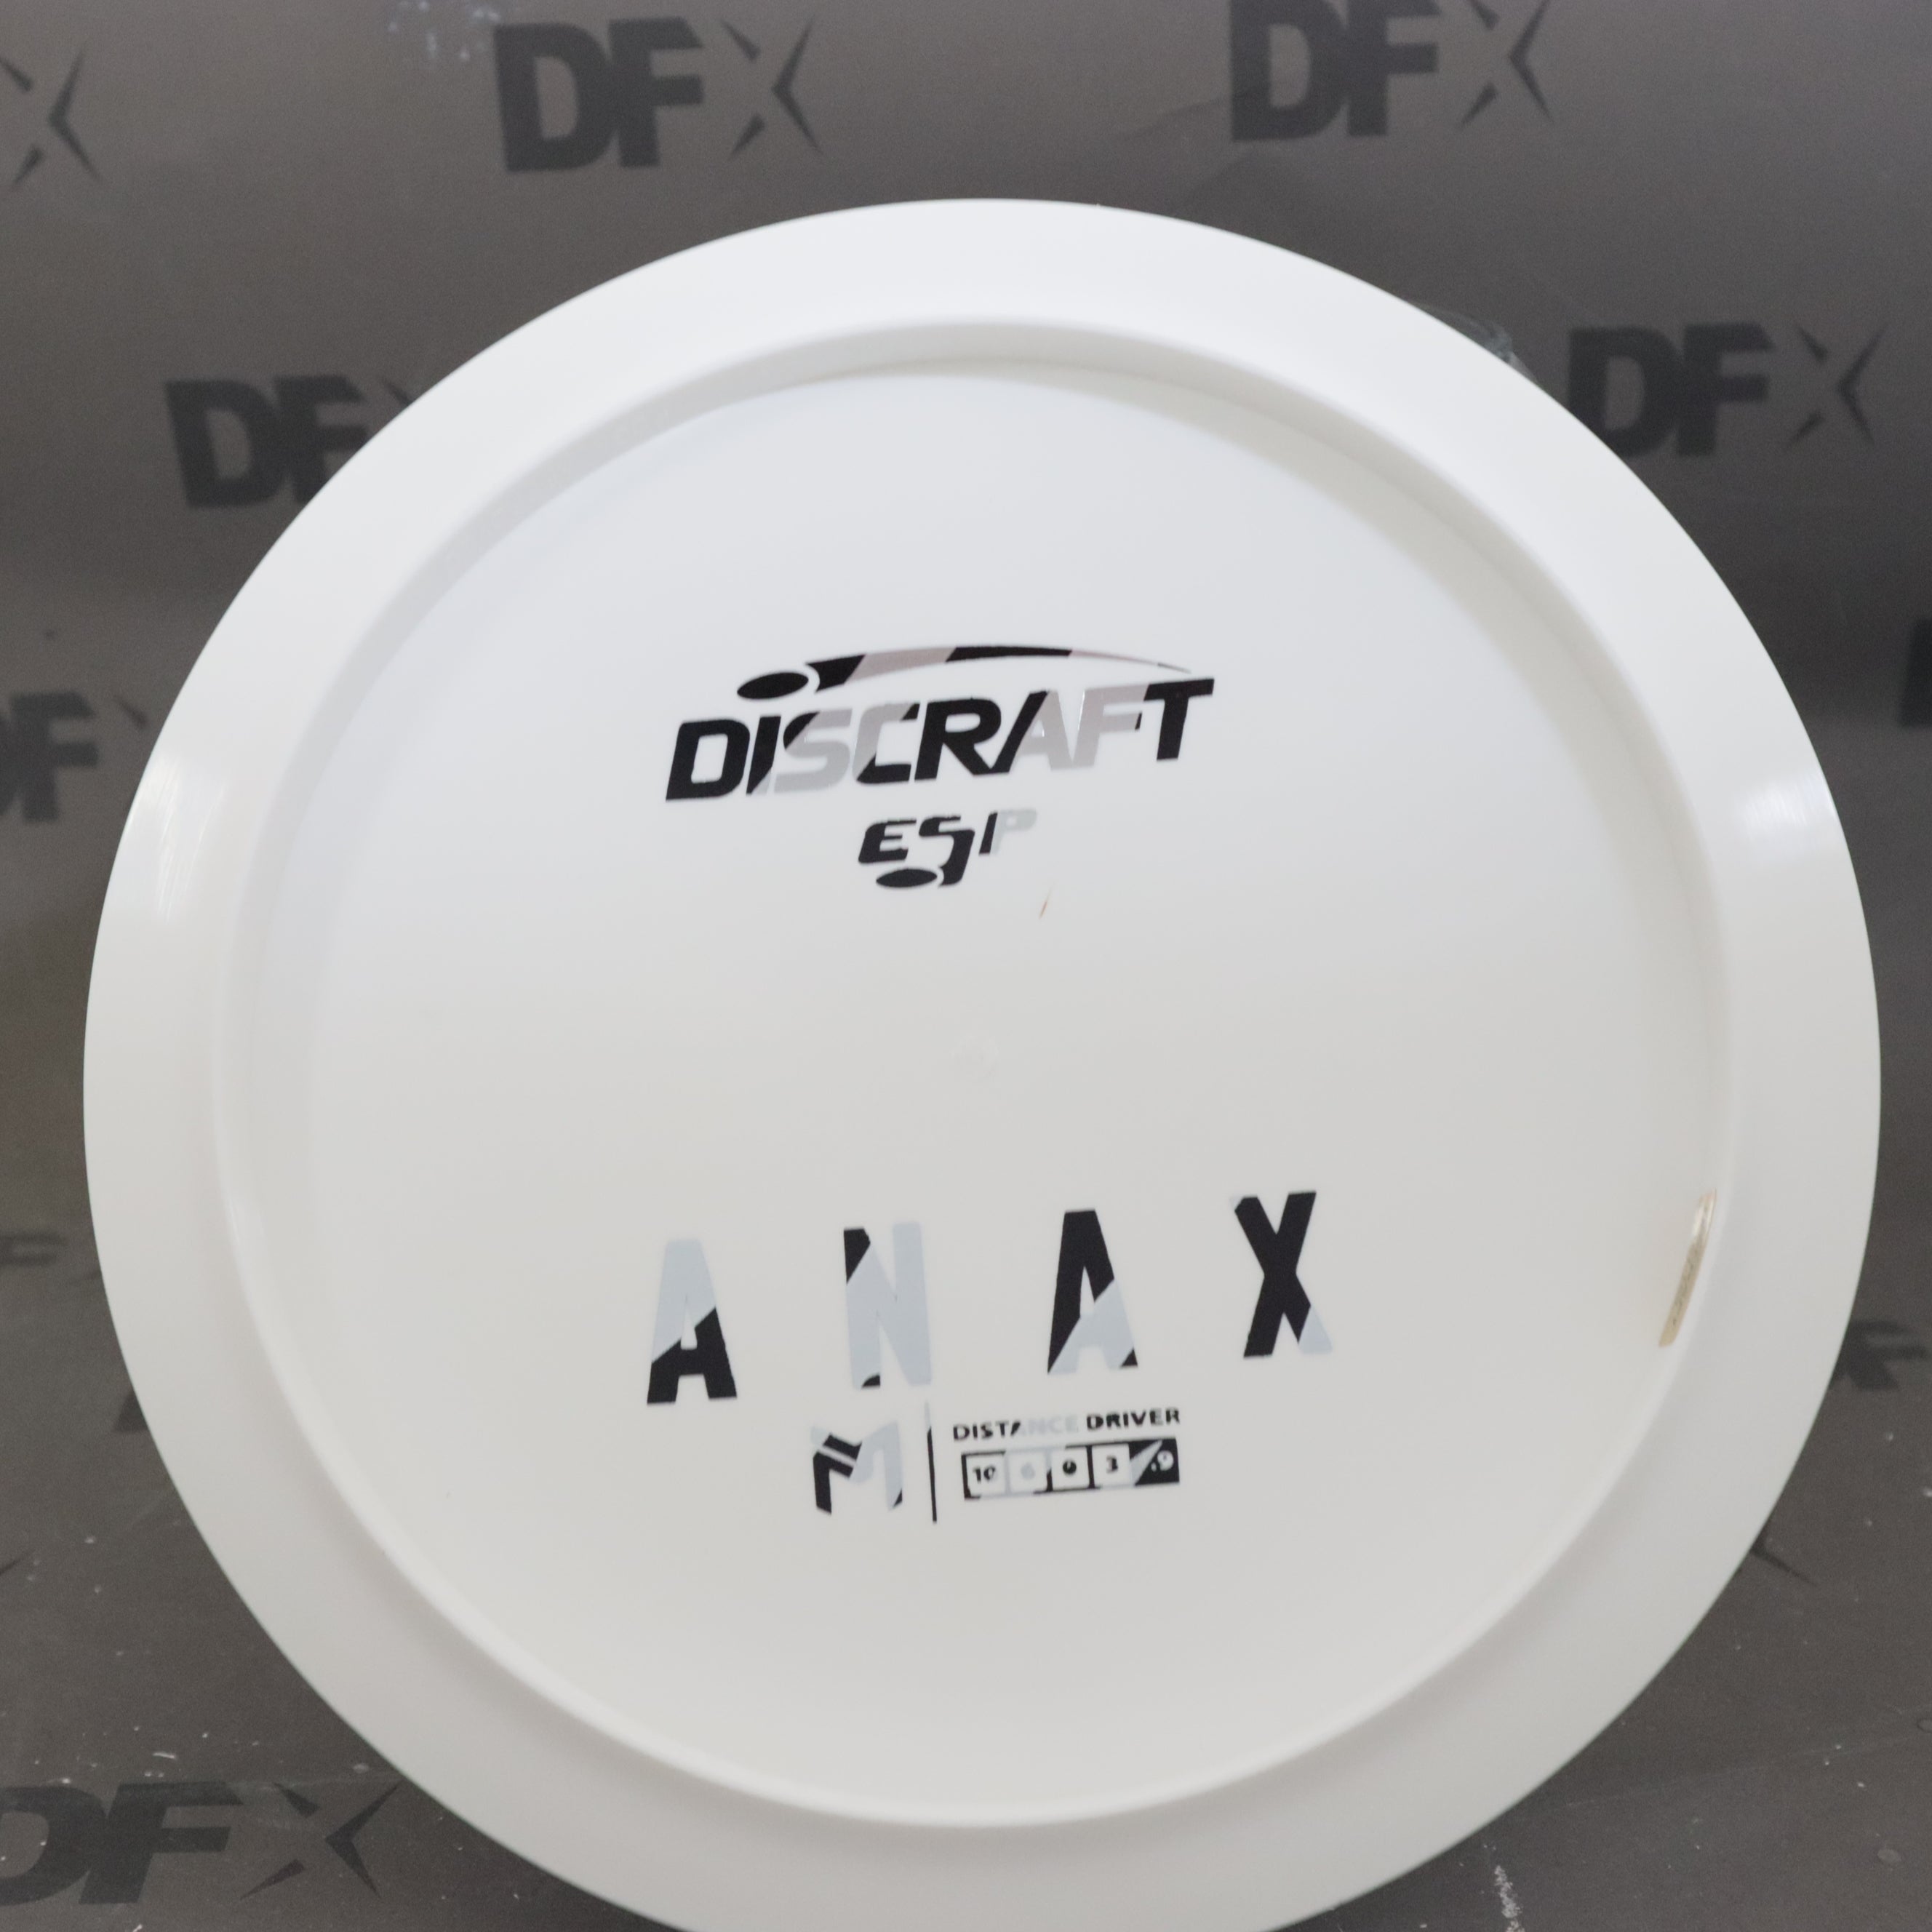 Discraft ESP Anax - Dyer Delight (Bottom Stamped)